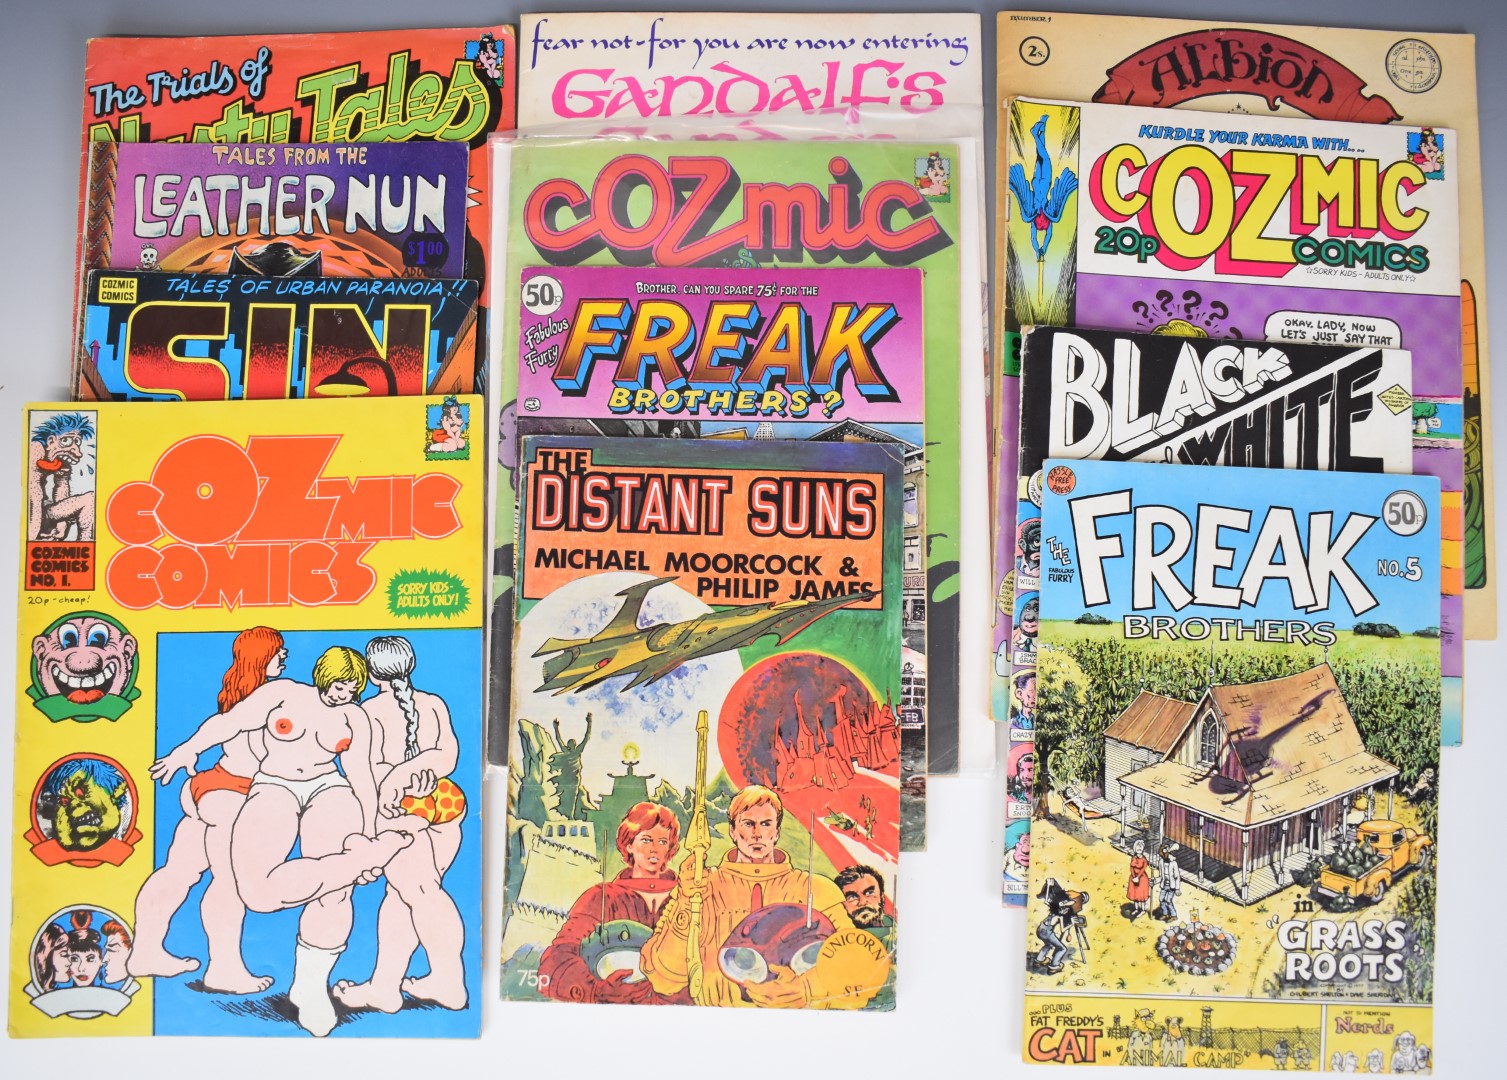 1960s/70s pop anti establishment counterculture  adult comics and magazines comprising Gandalf's